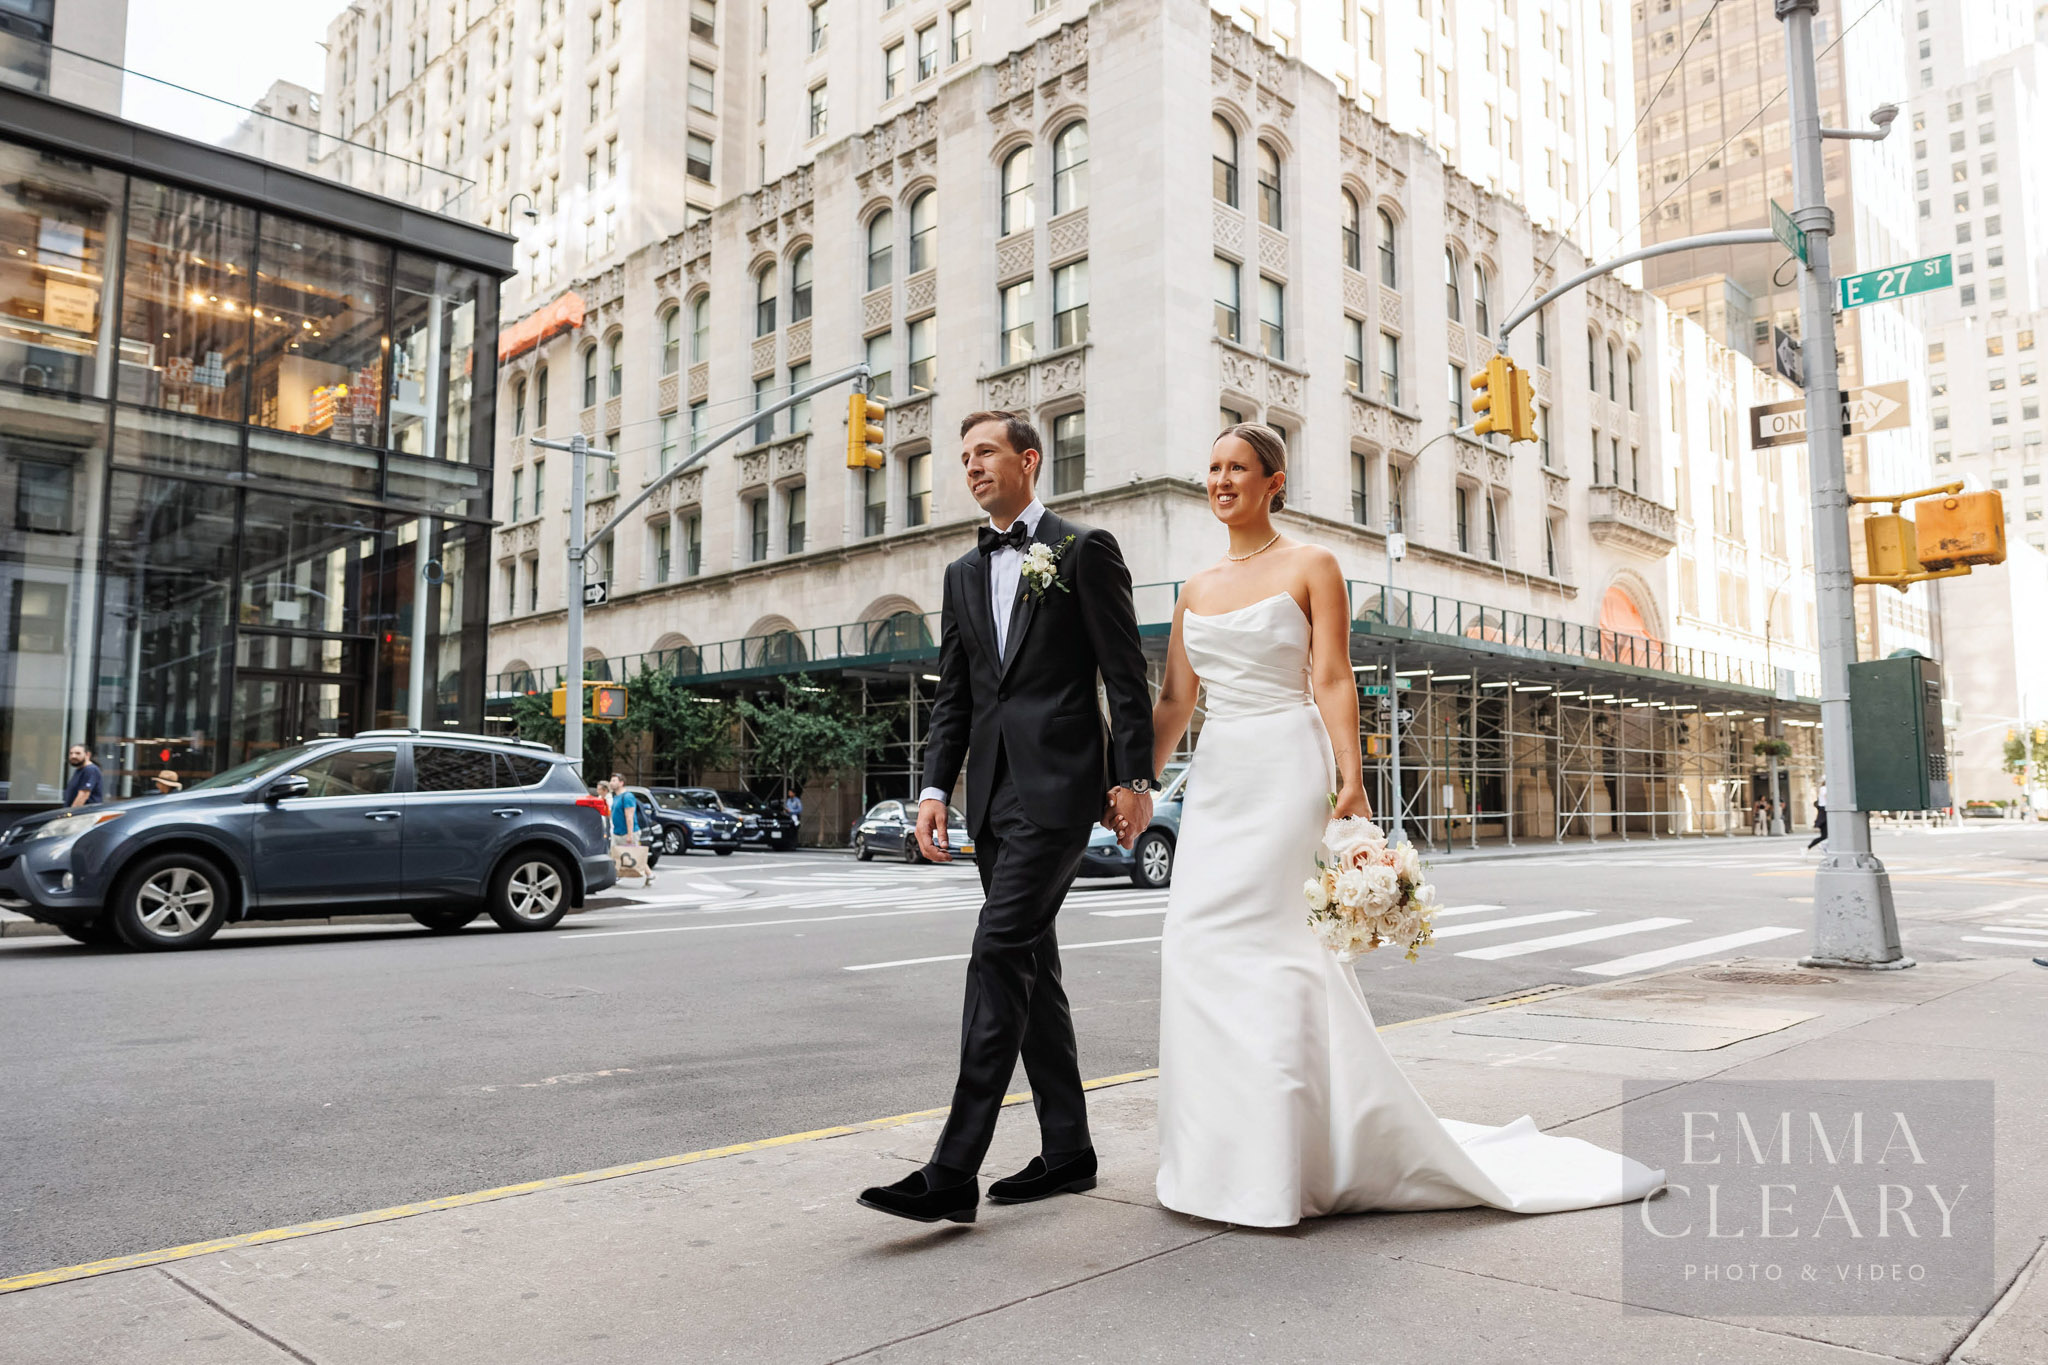 New York street wedding photo og the couple